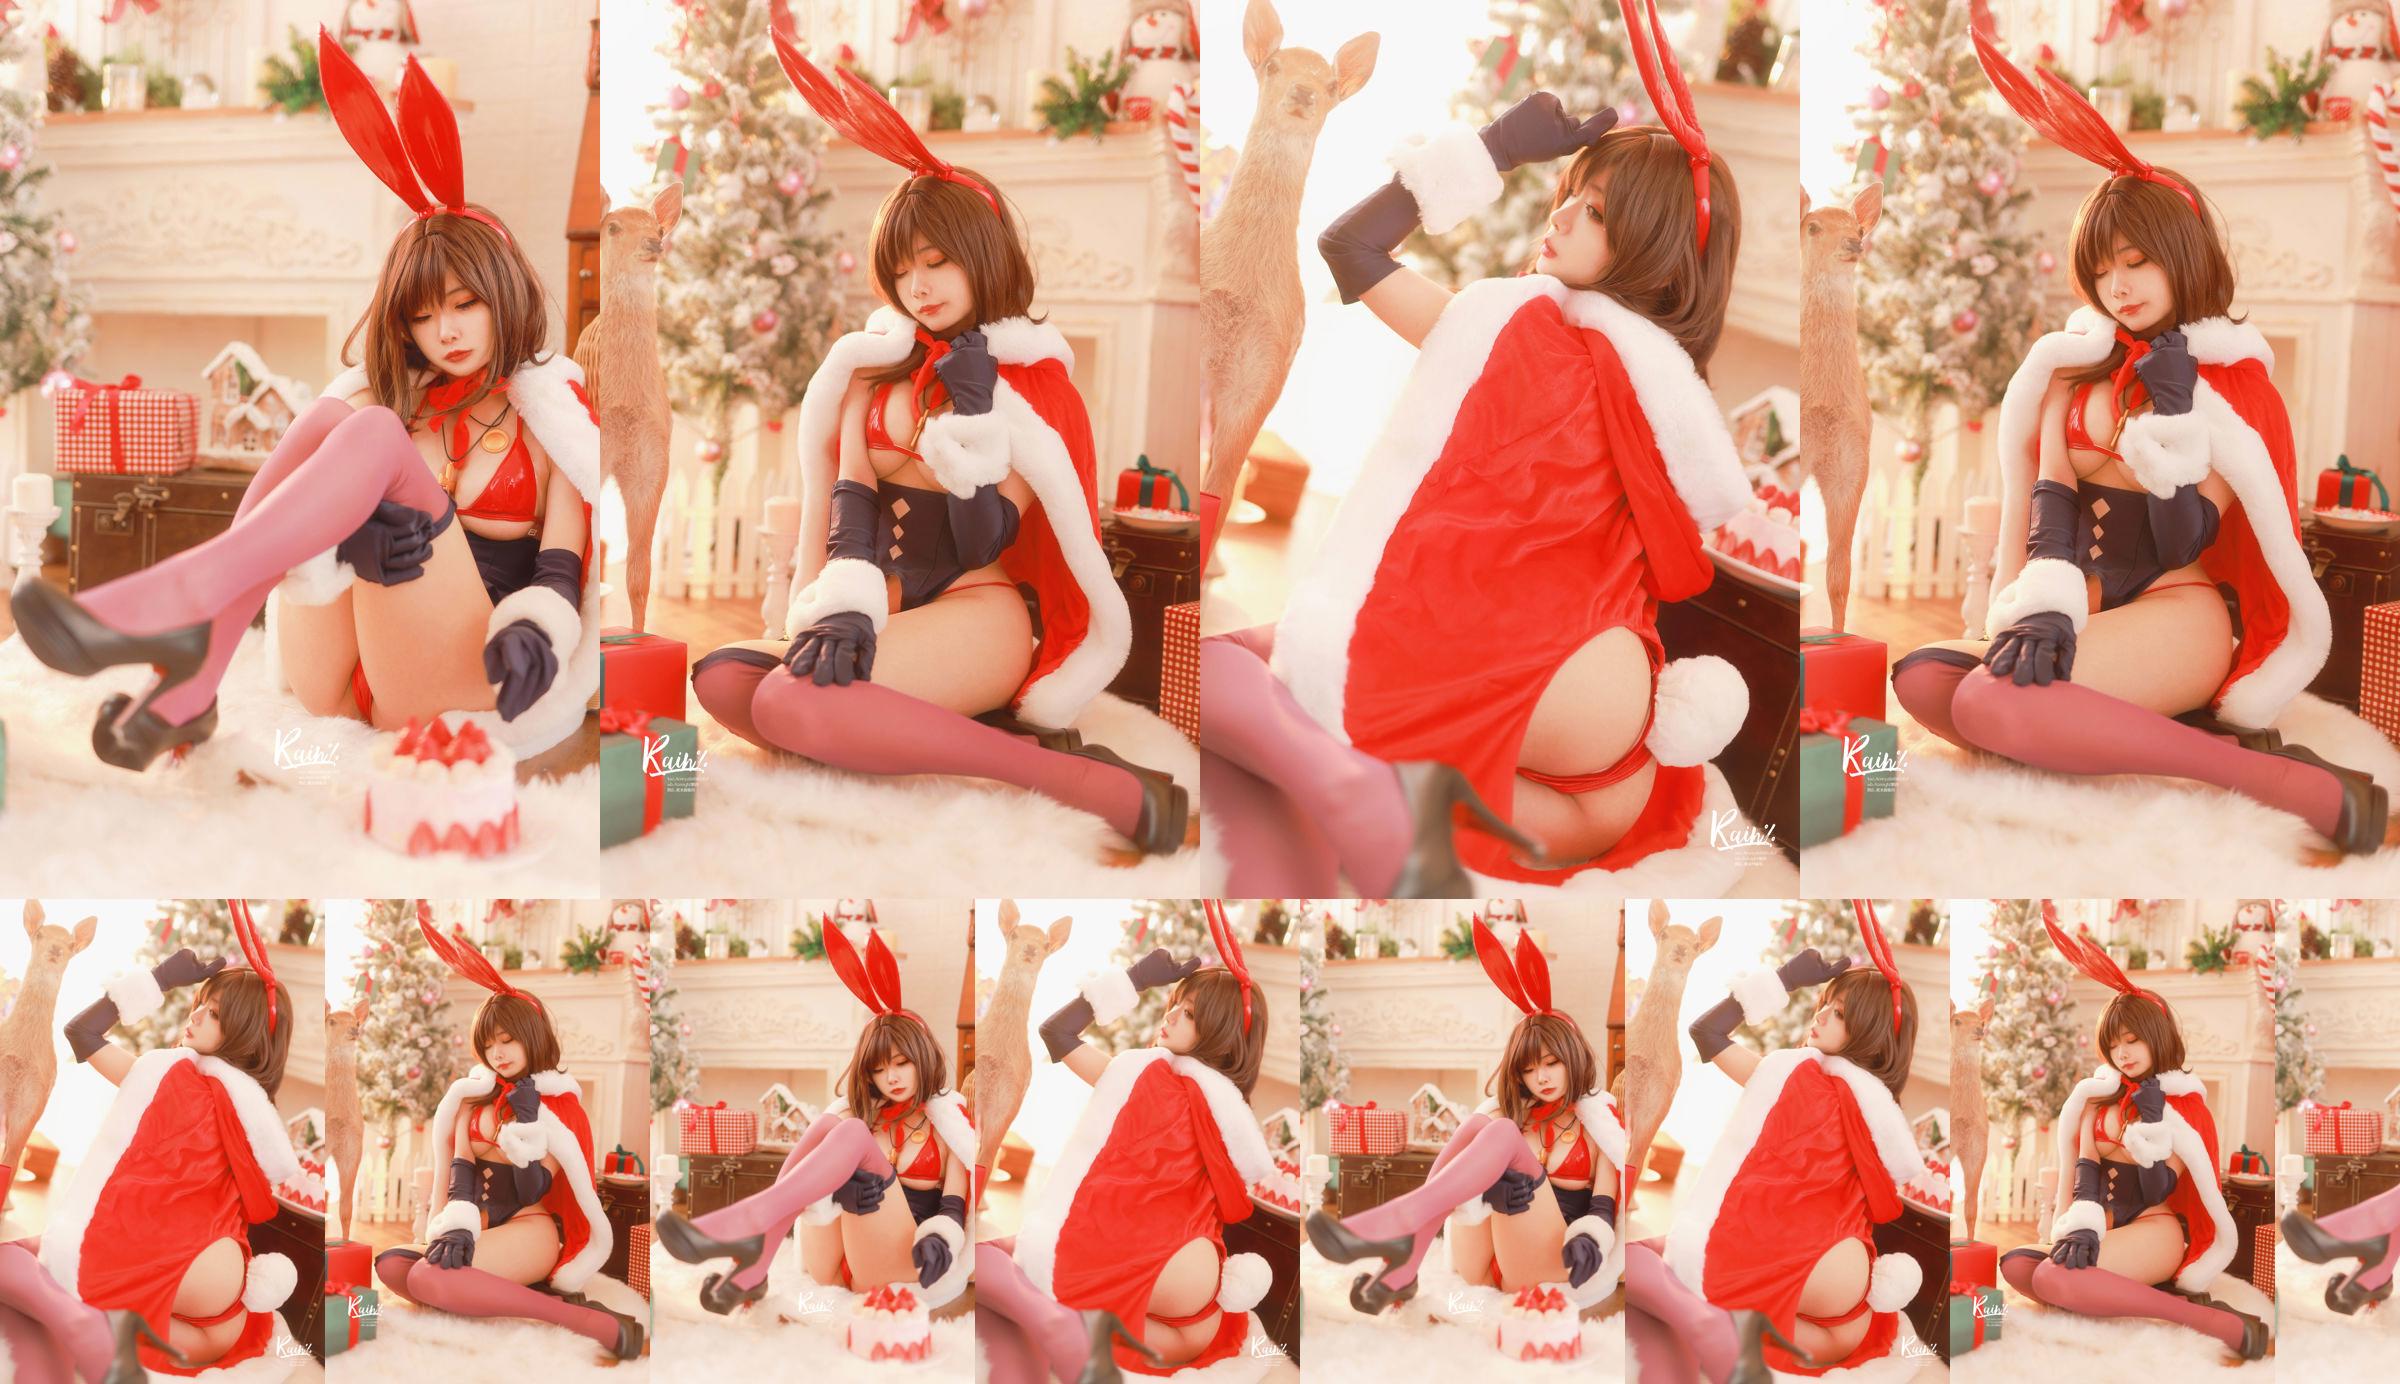 [Net Red COSER Photo] Anime blogger Rainight 魈雨-Christmas Rabbit No.8a19ba Page 1